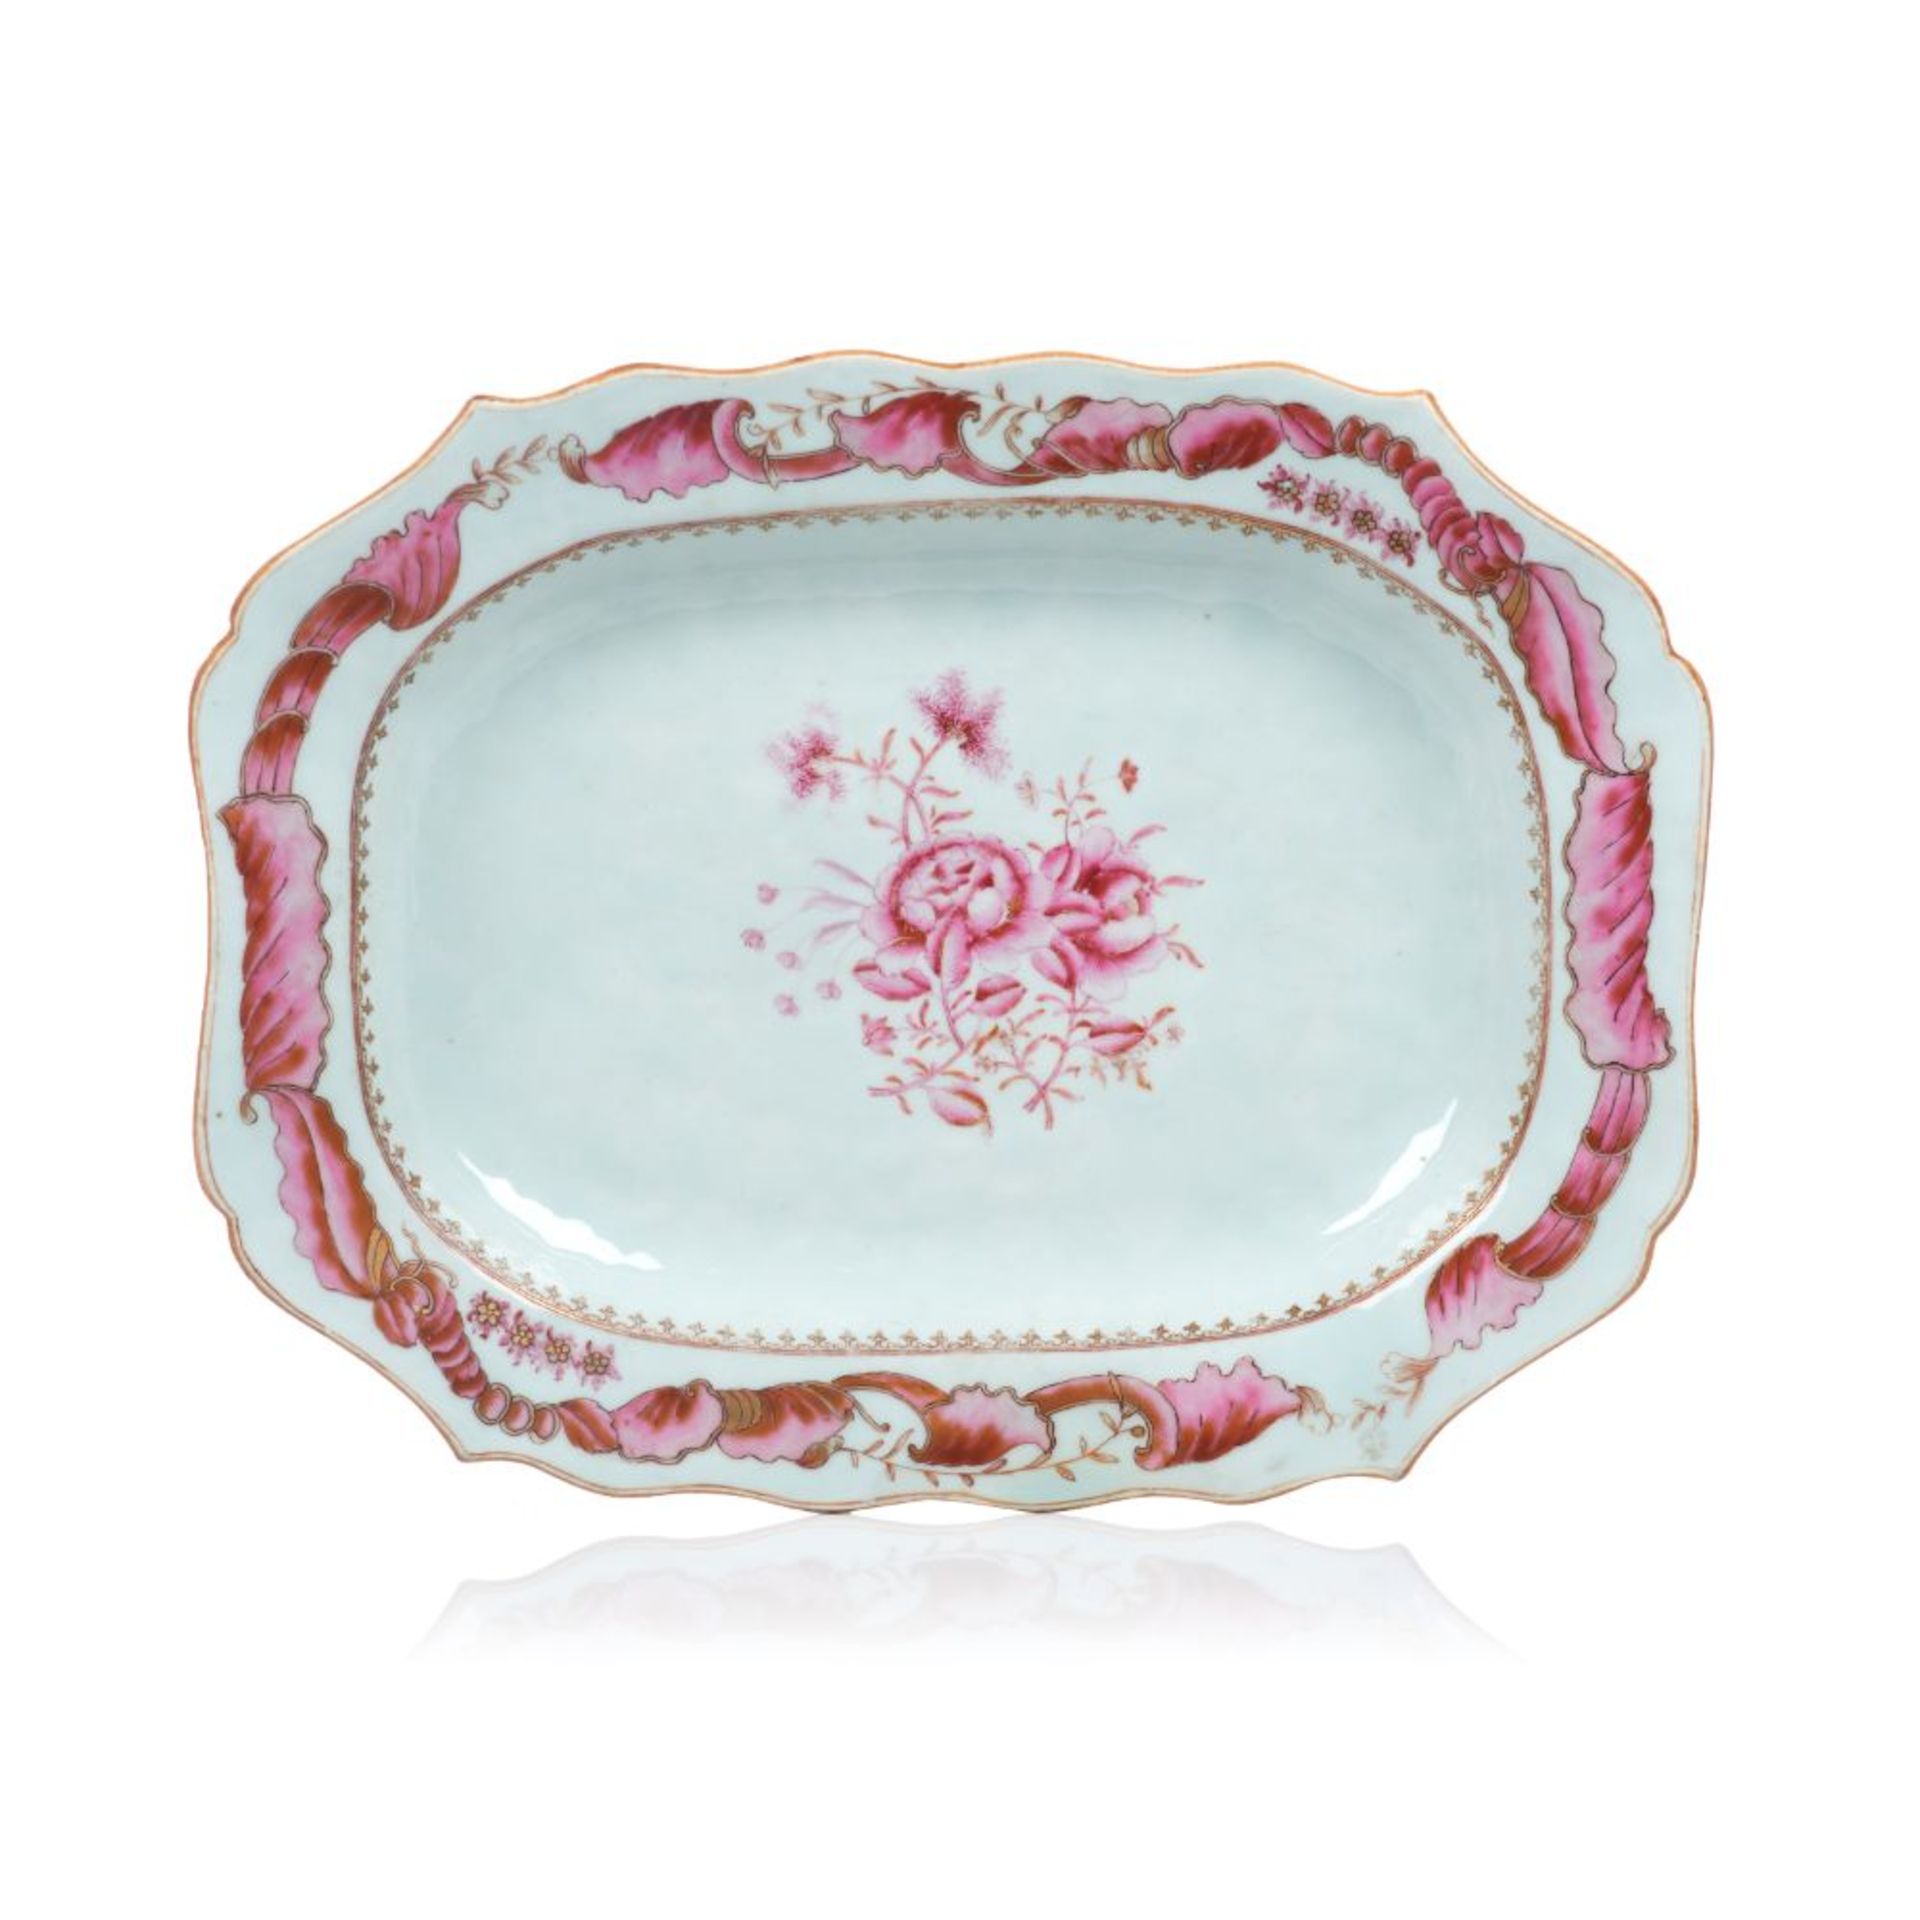 A scalloped serving platter, Chinese export porcelain, Polychrome floral "Famille Rose" enamelled,